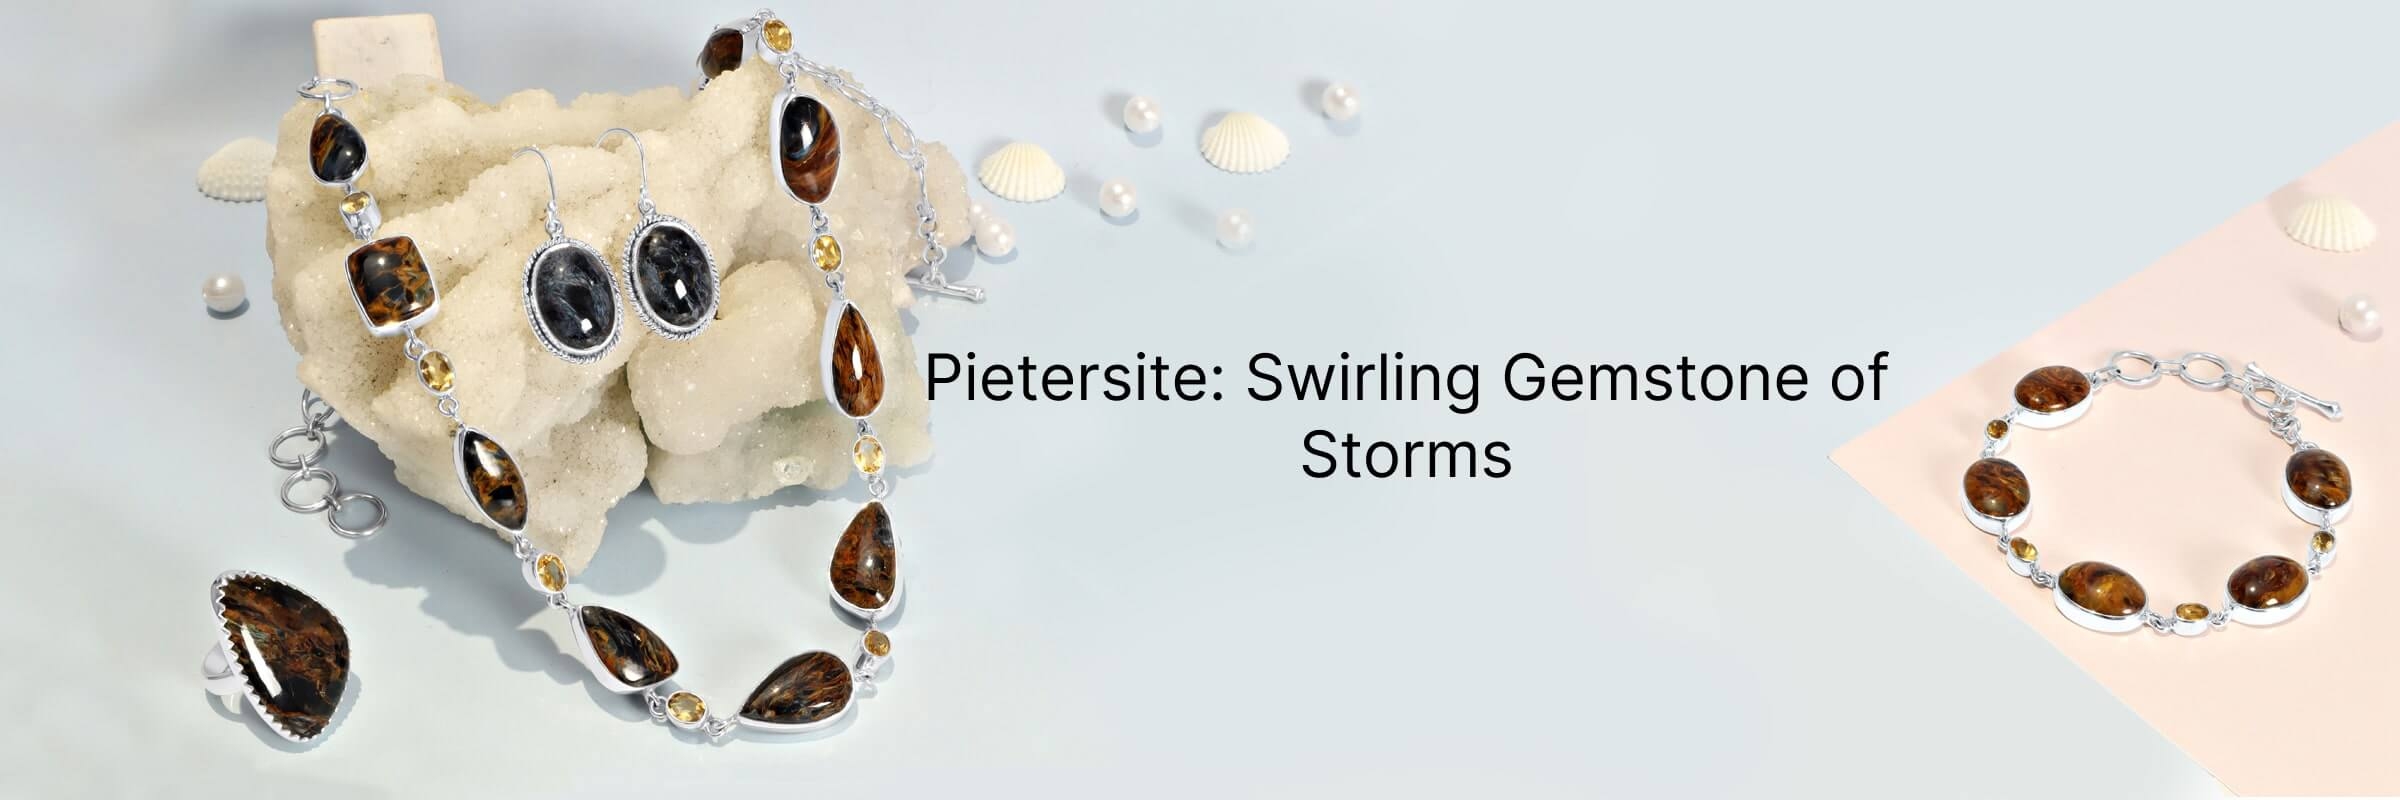 Pietersite Gemstone: Meaning, Healing Properties & Uses 1